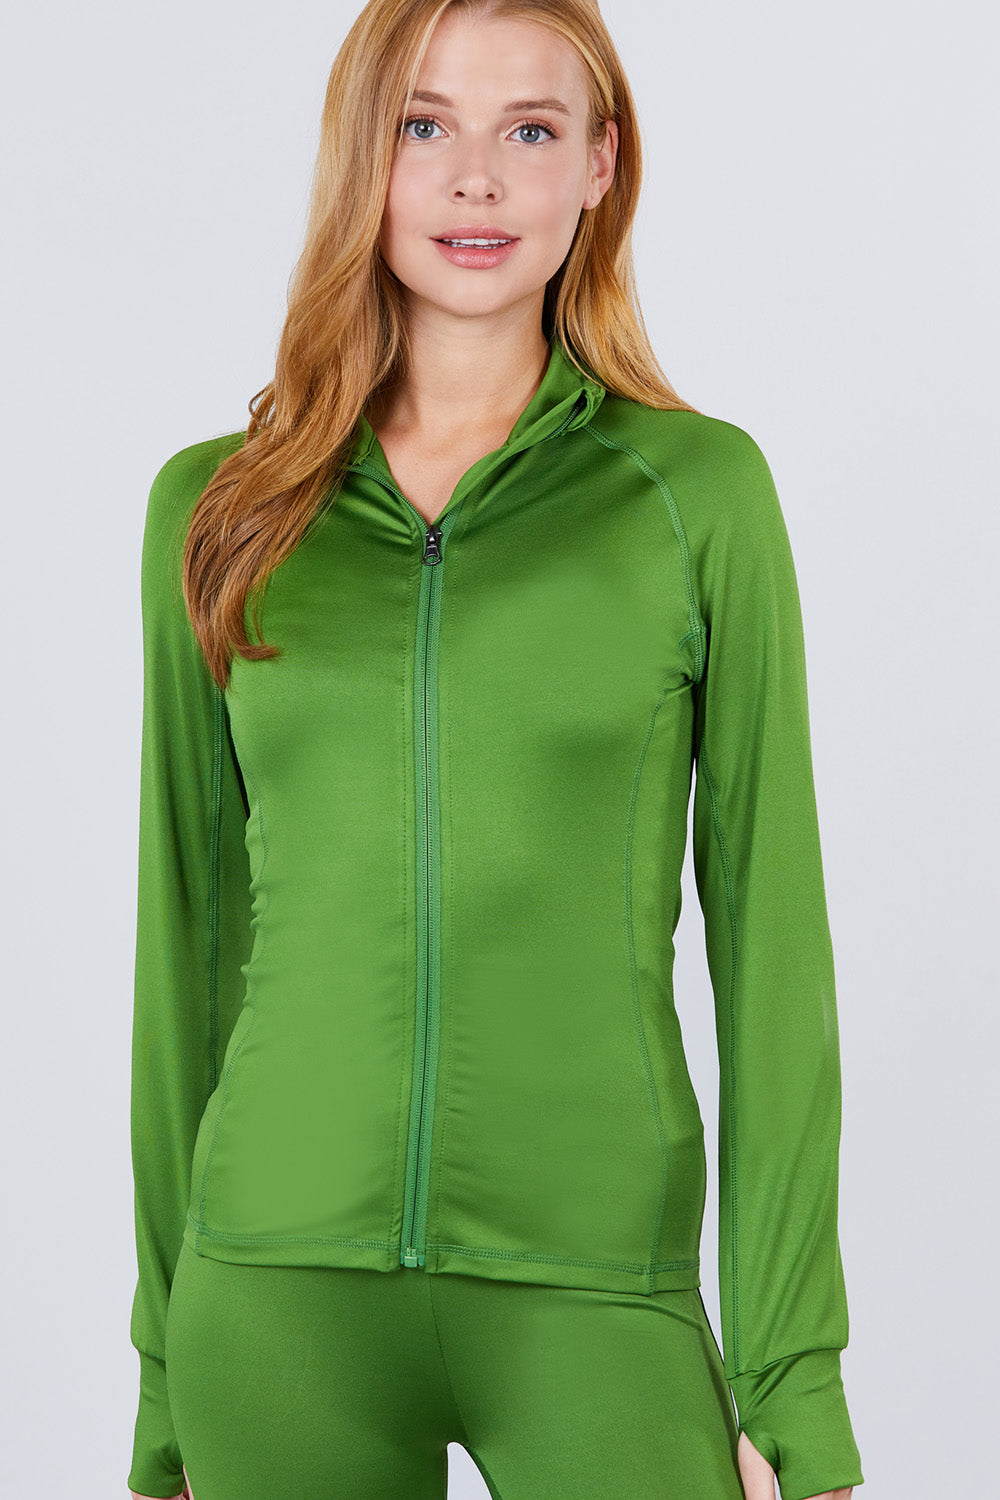 Women's Long Sleeve Zip up Athletic wear sweater Work Out Gym jacket –  Khanomak